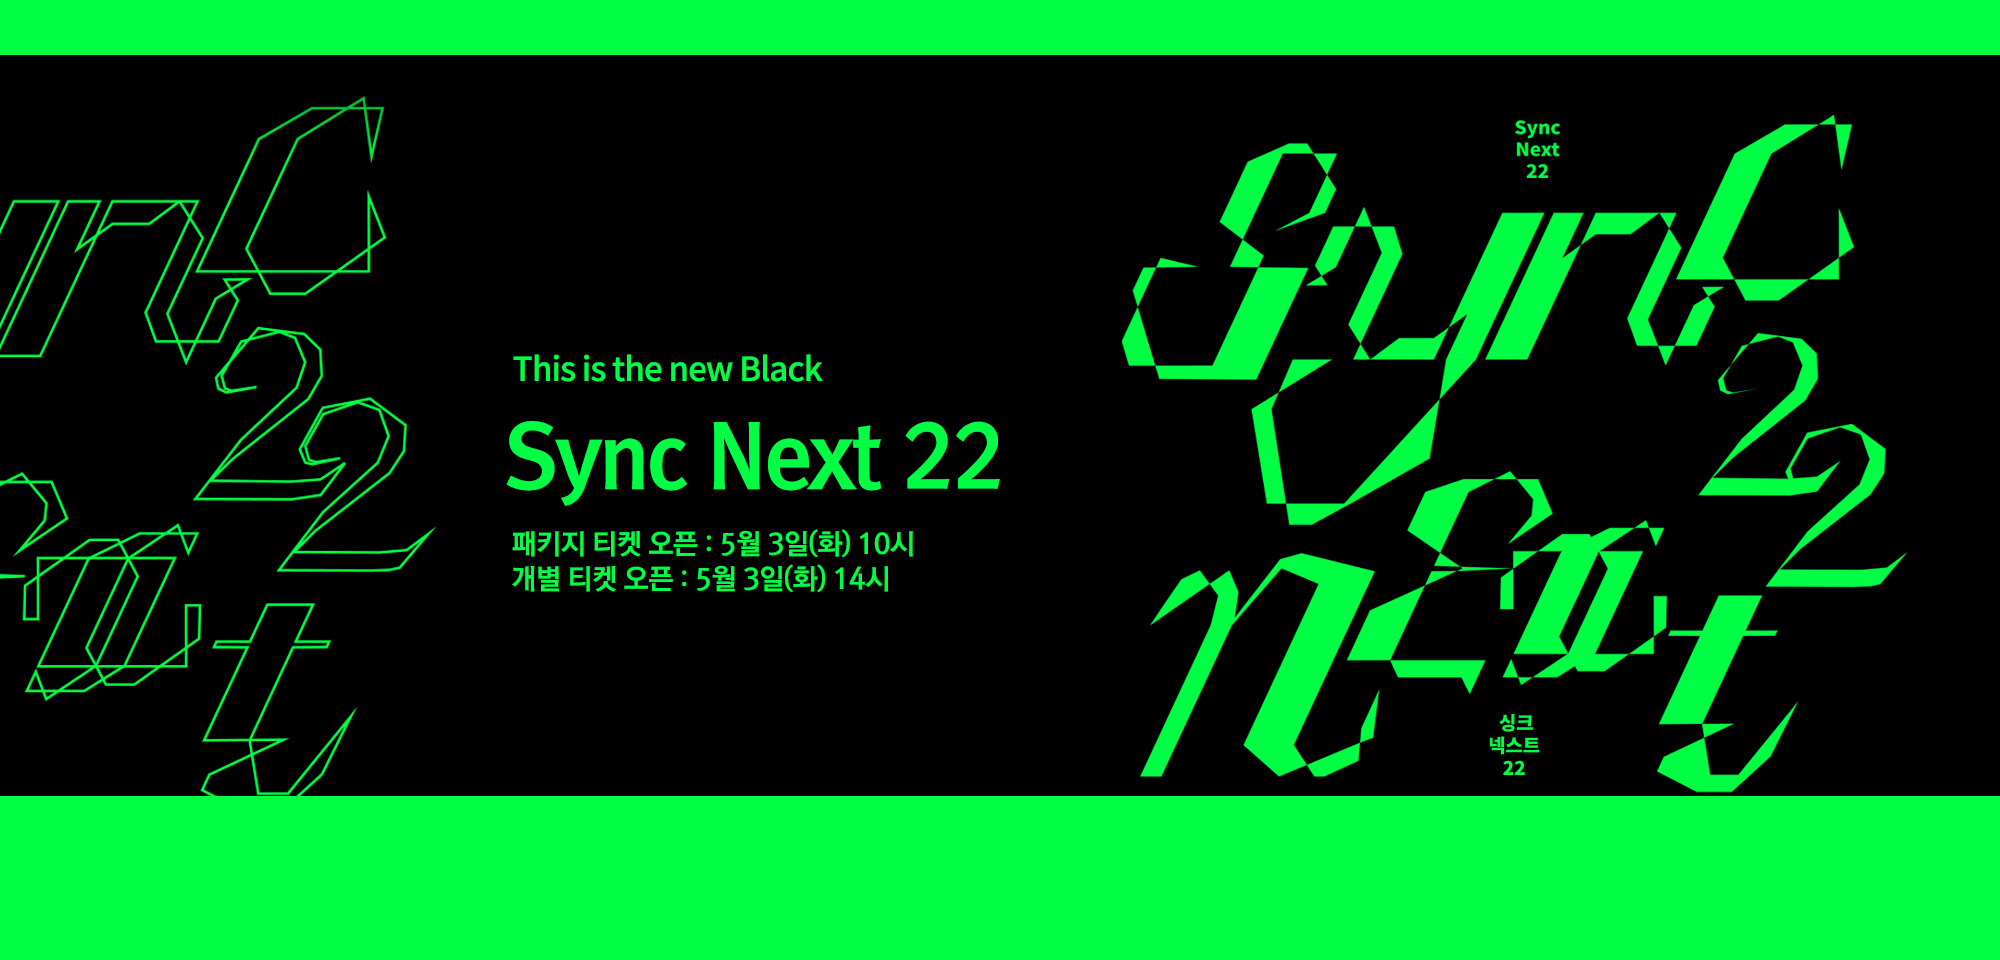 This is the new Black Sync Next 22 패키지 티켓오픈 : 5월 3일 화 10시 개별티켓 오픈 5월 3일 화 14시